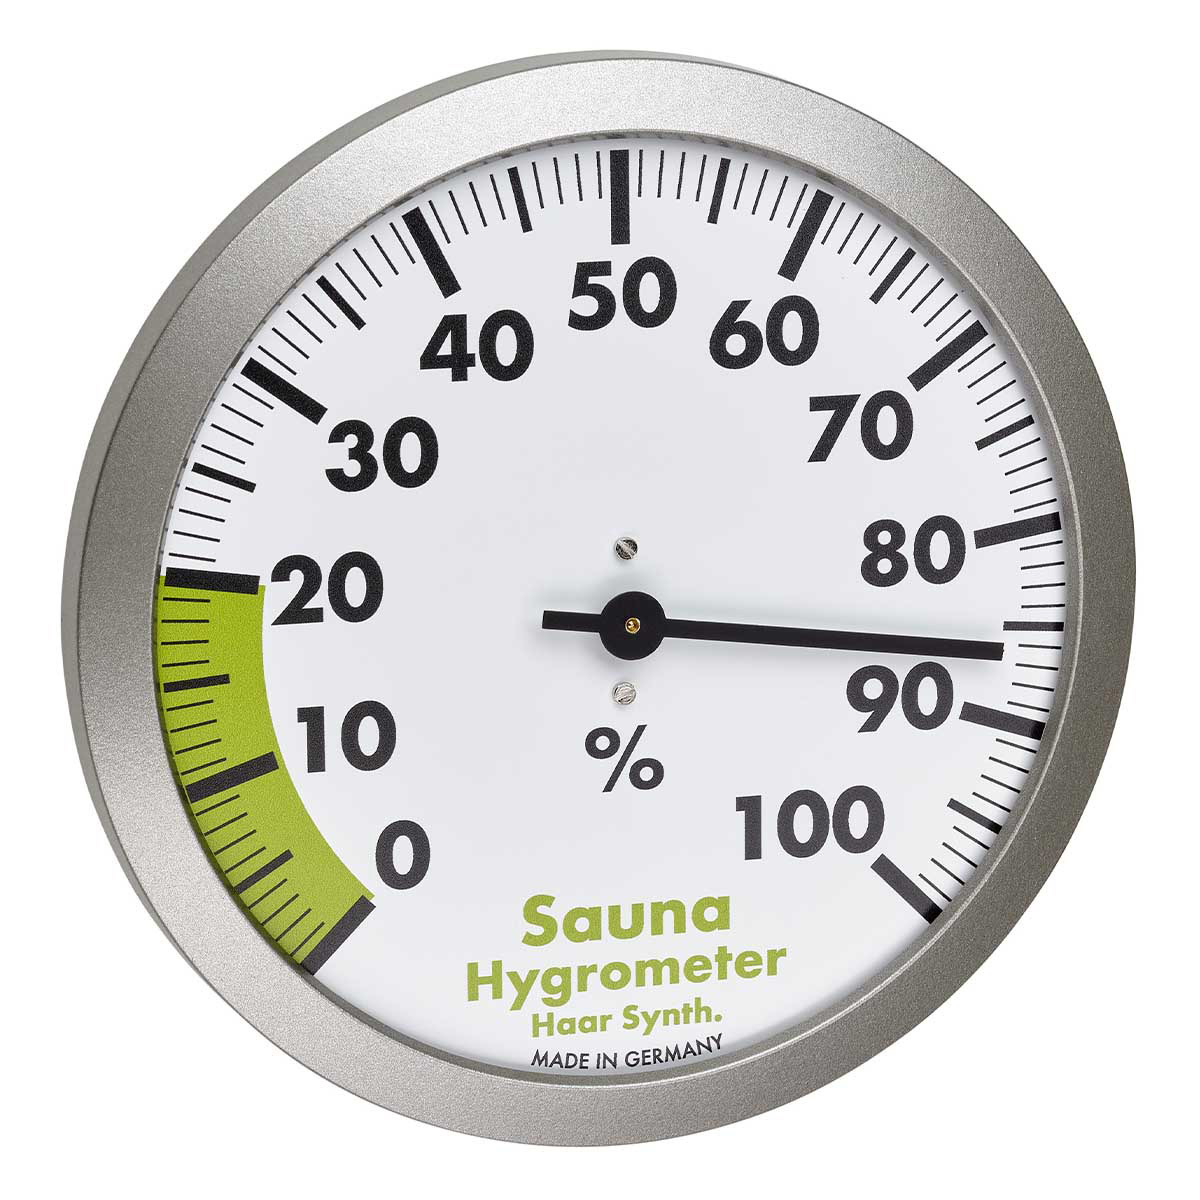 40-1054-50-analoges-sauna-hygrometer-1200x1200px.jpg